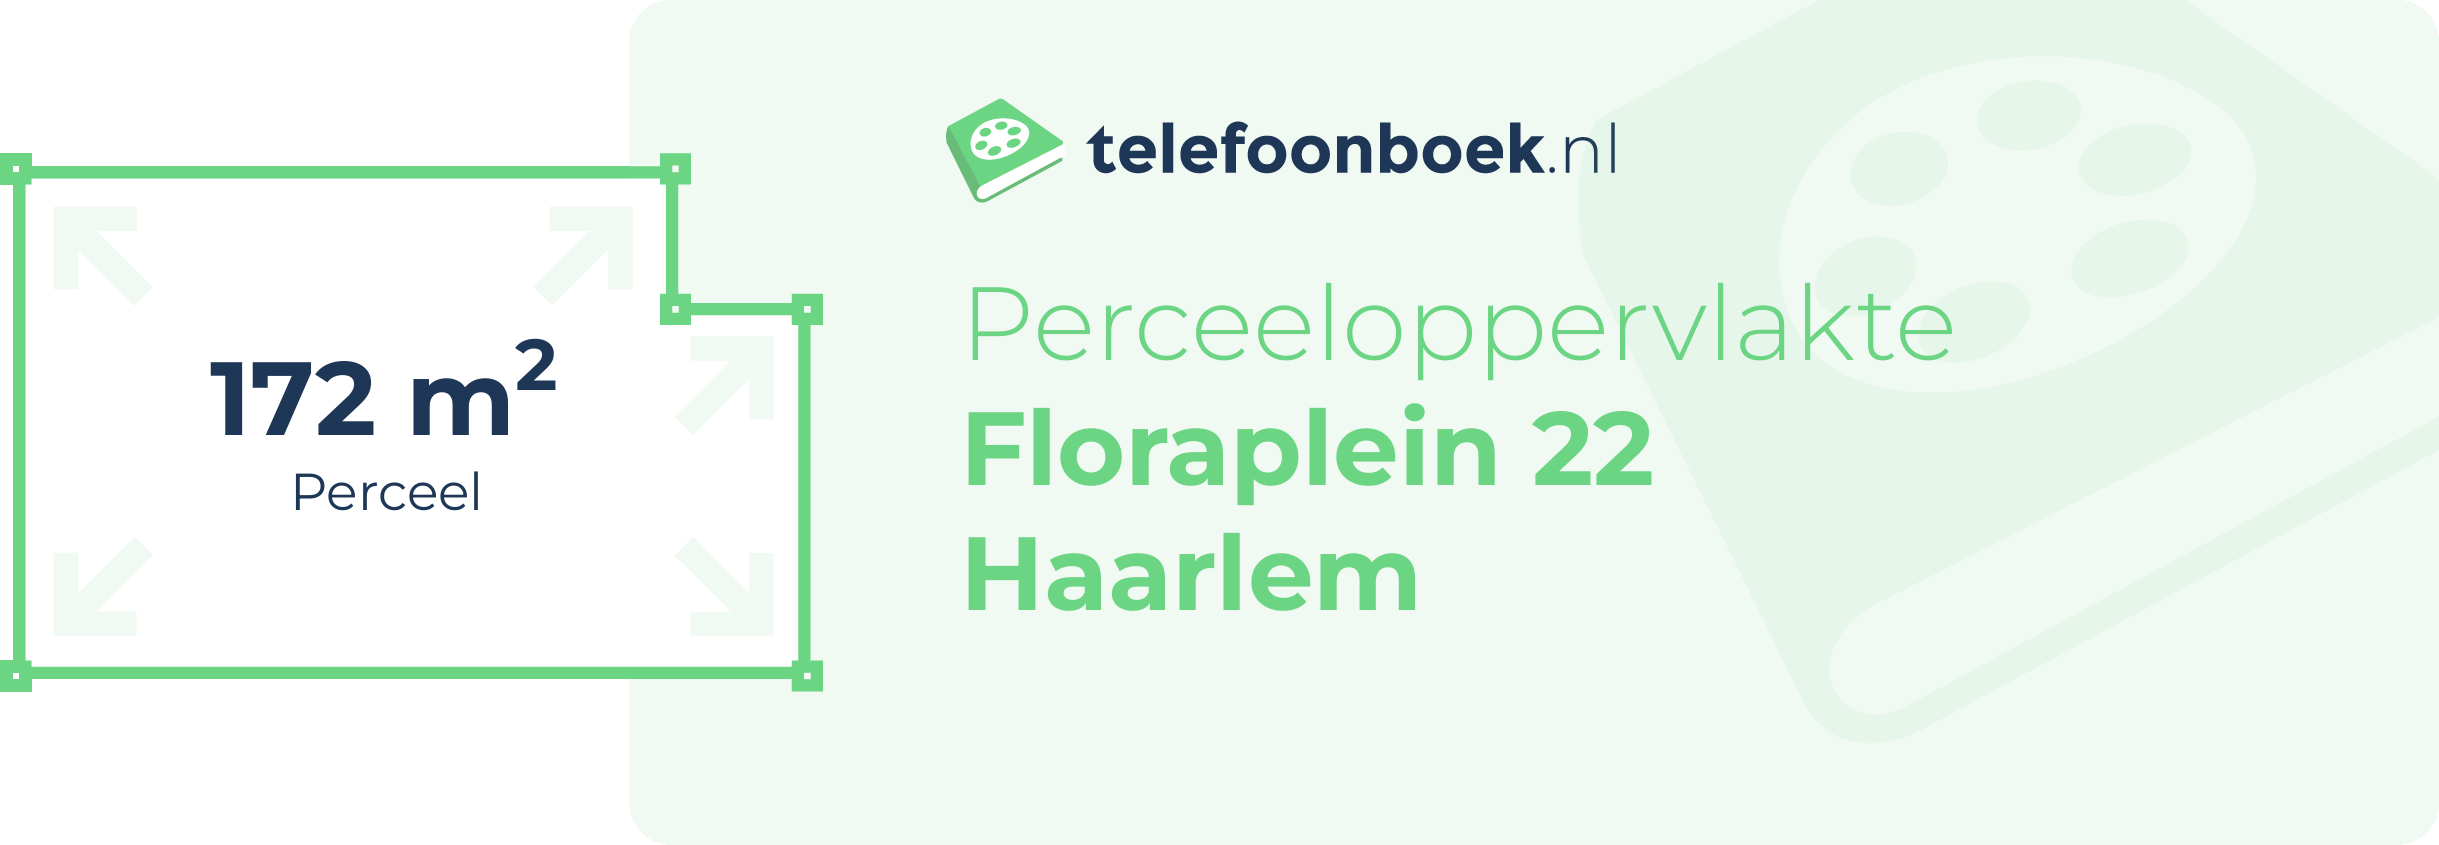 Perceeloppervlakte Floraplein 22 Haarlem